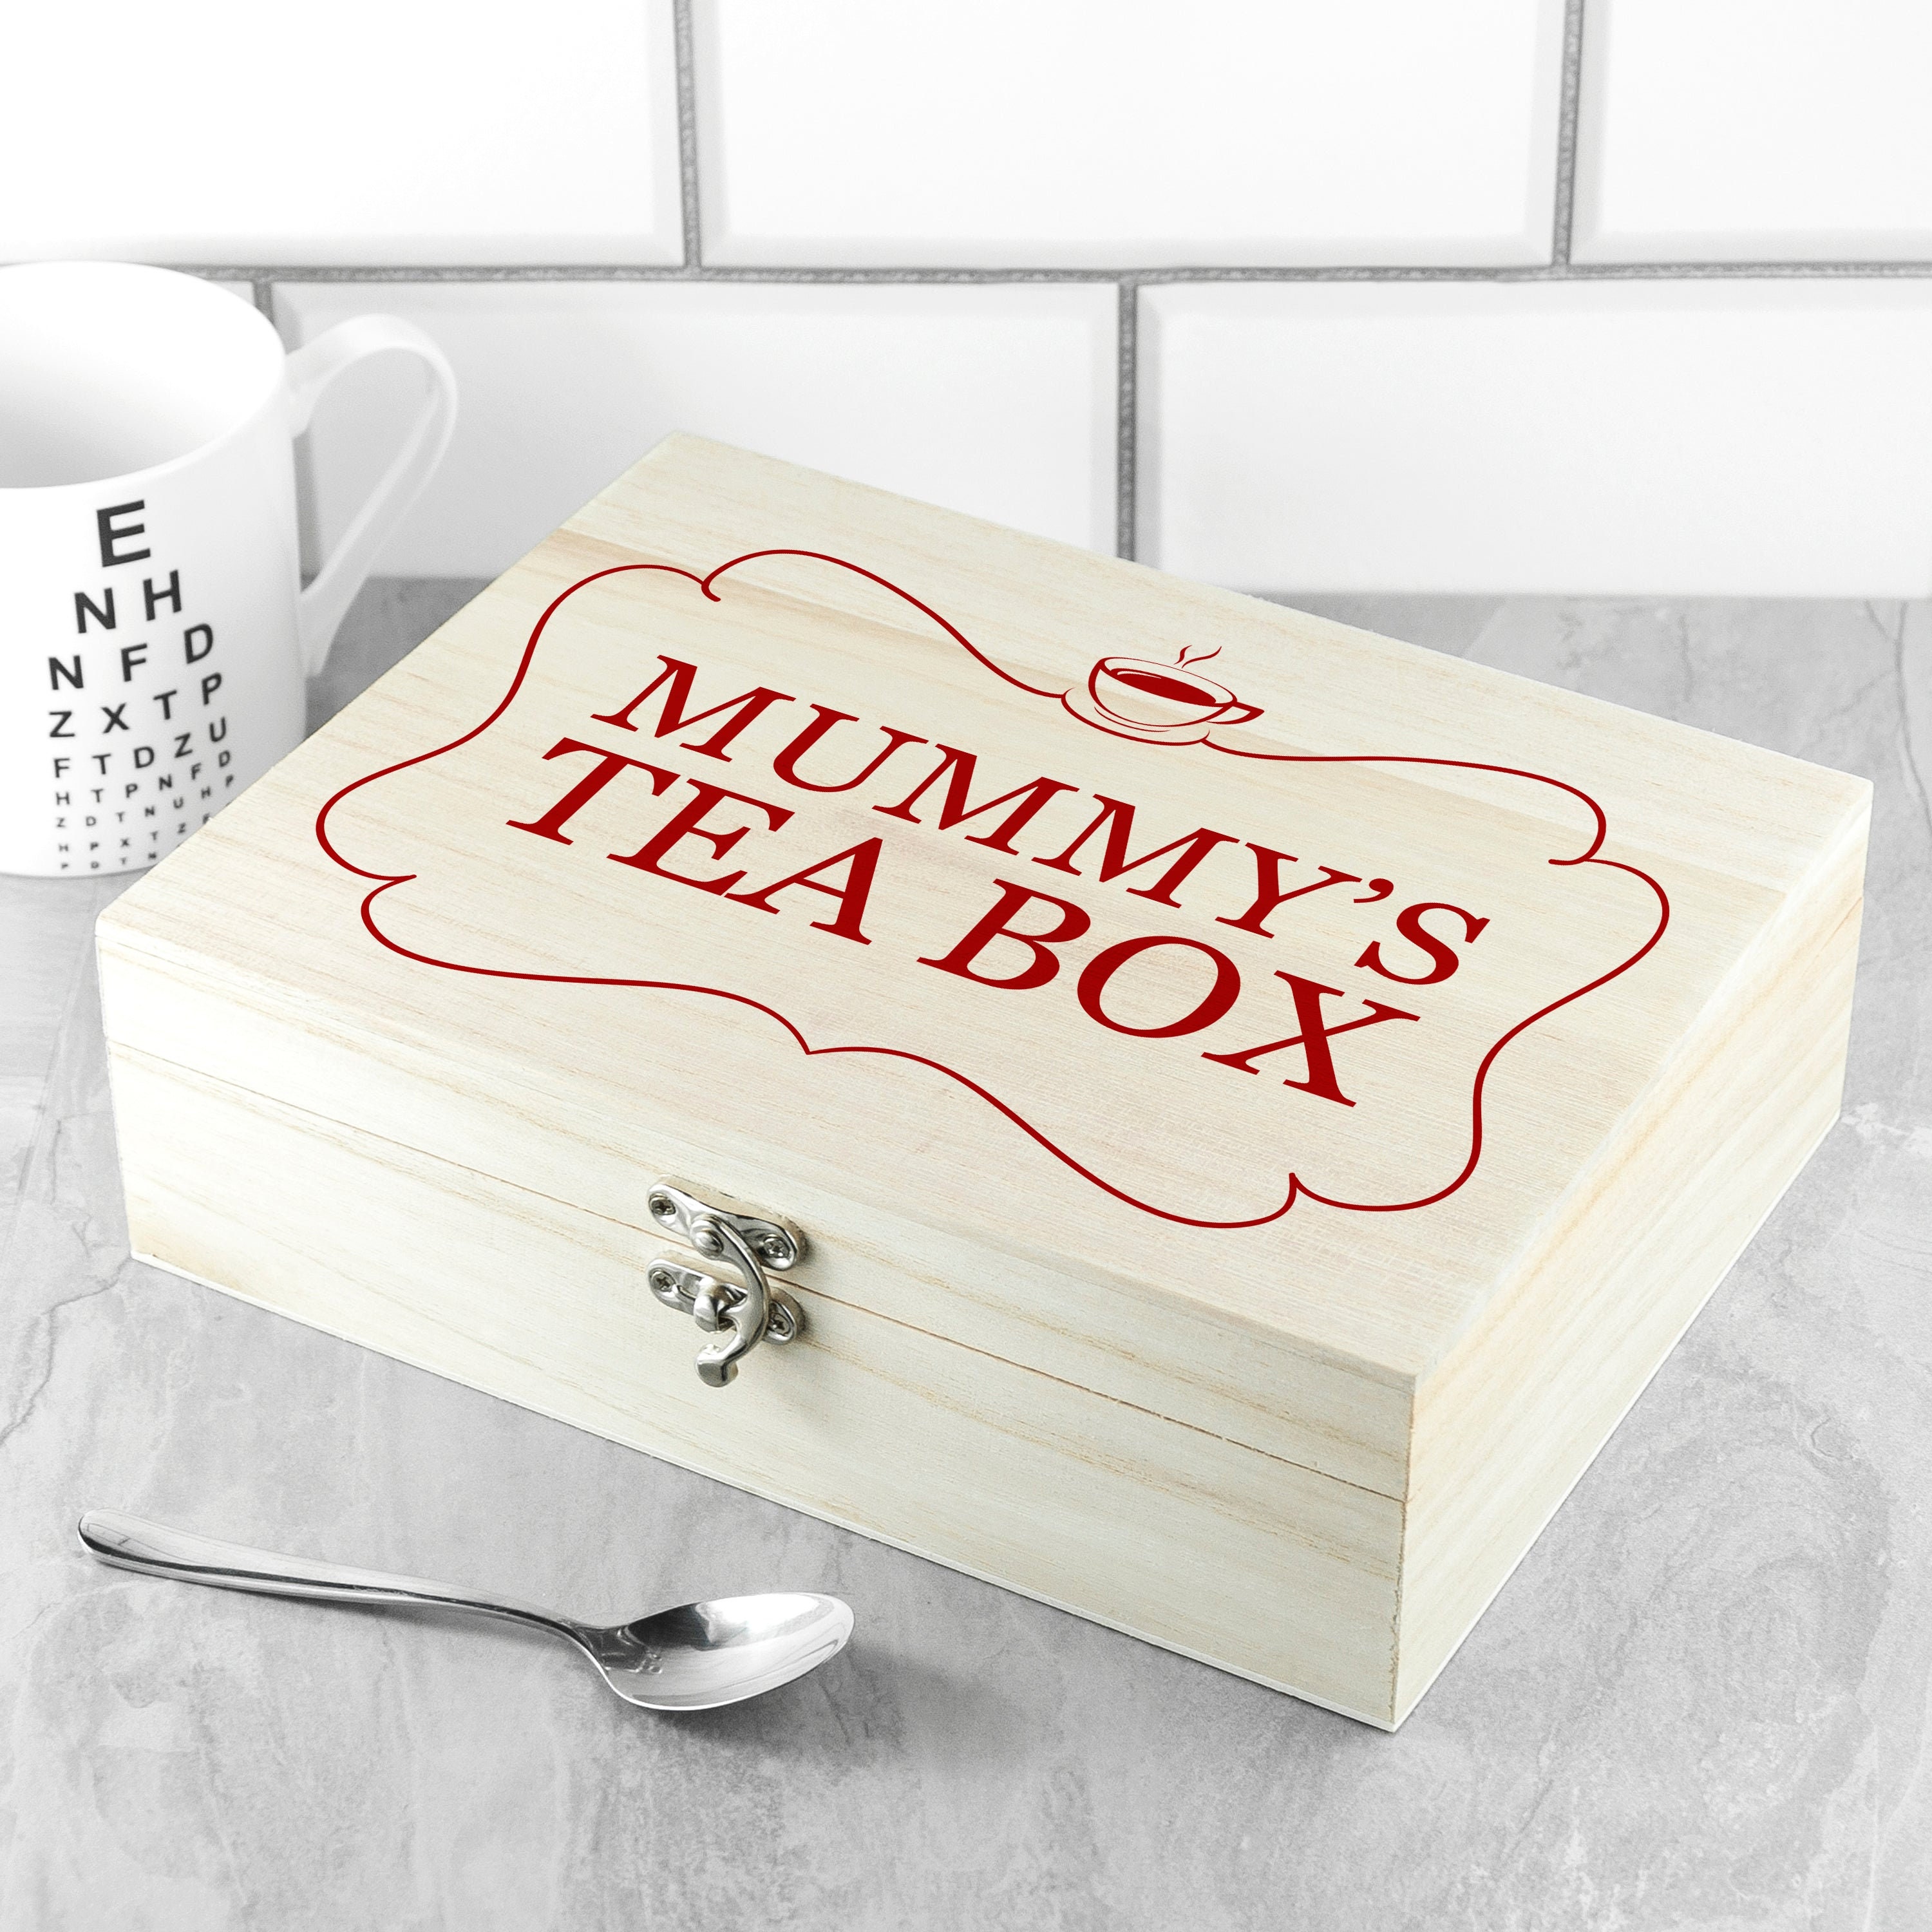 Pukka Herbs Tea Selection Luxury Gift Box, Collection of